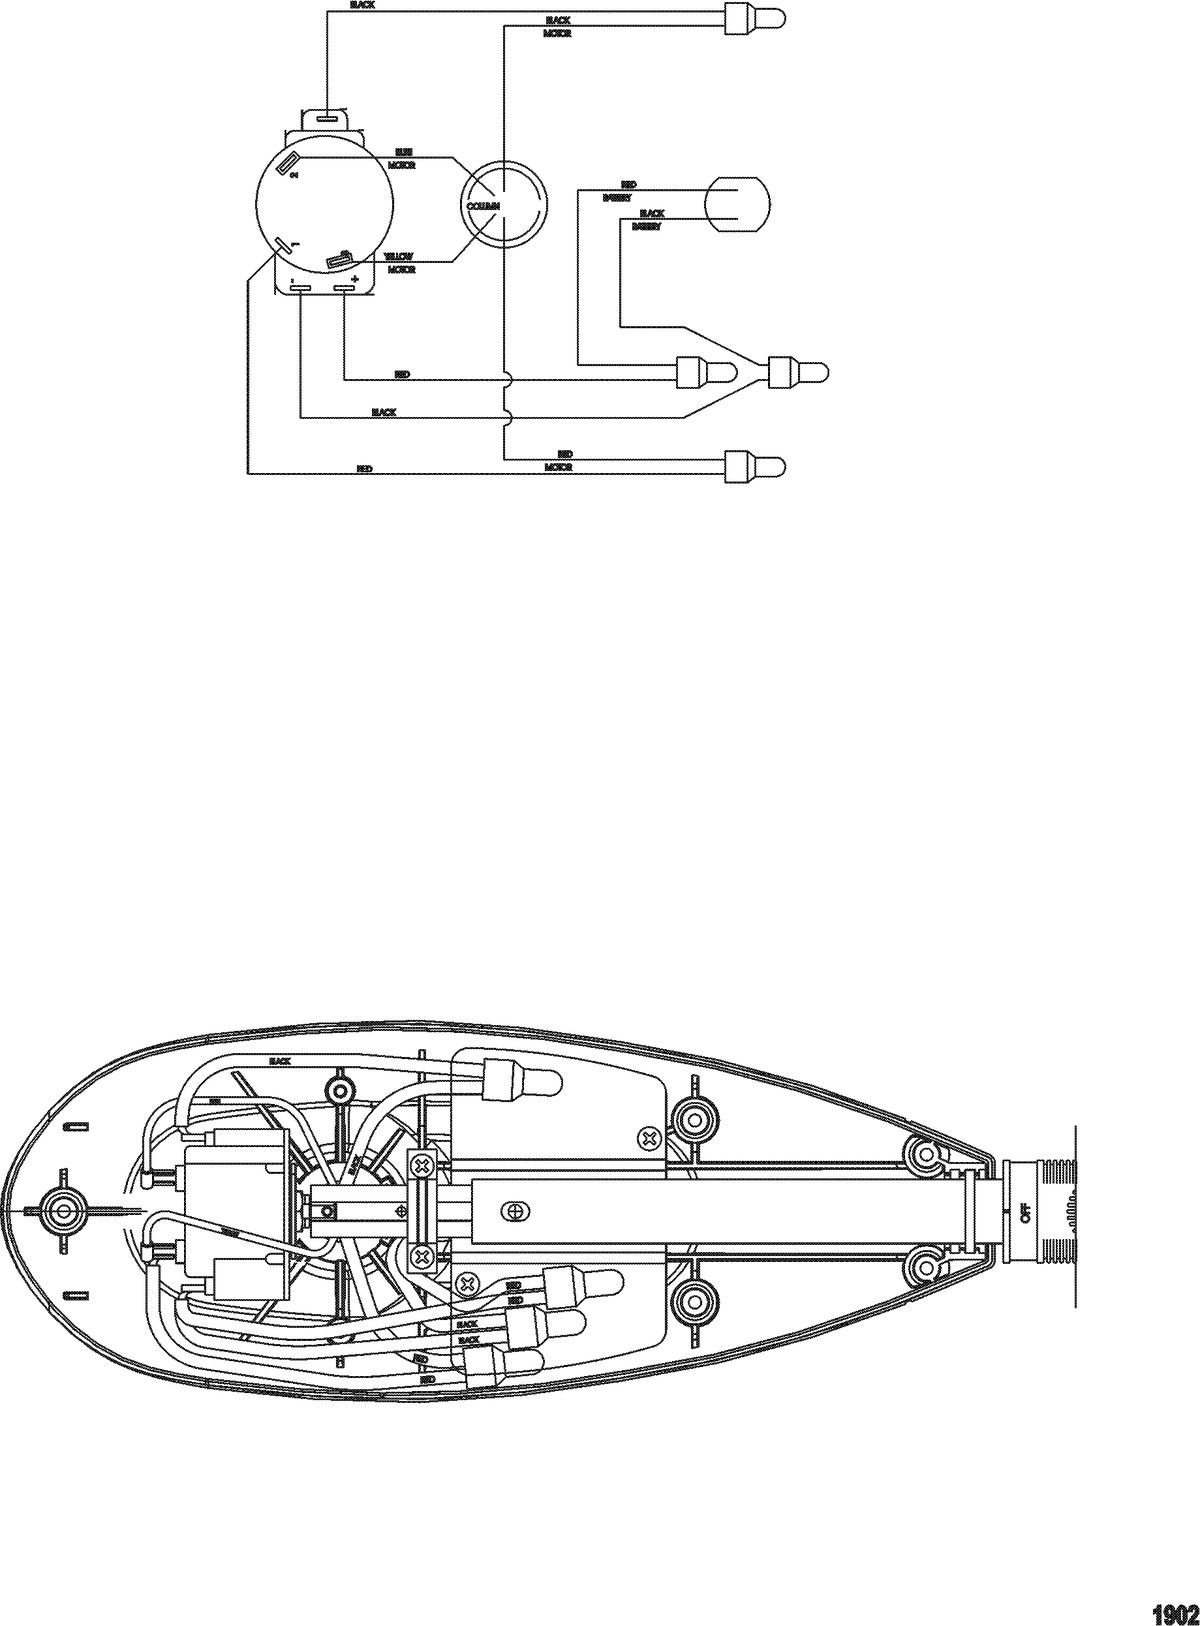 TROLLING MOTOR MOTORGUIDE ENERGY SERIES Wire Diagram(Model ET44) (12 Volt)